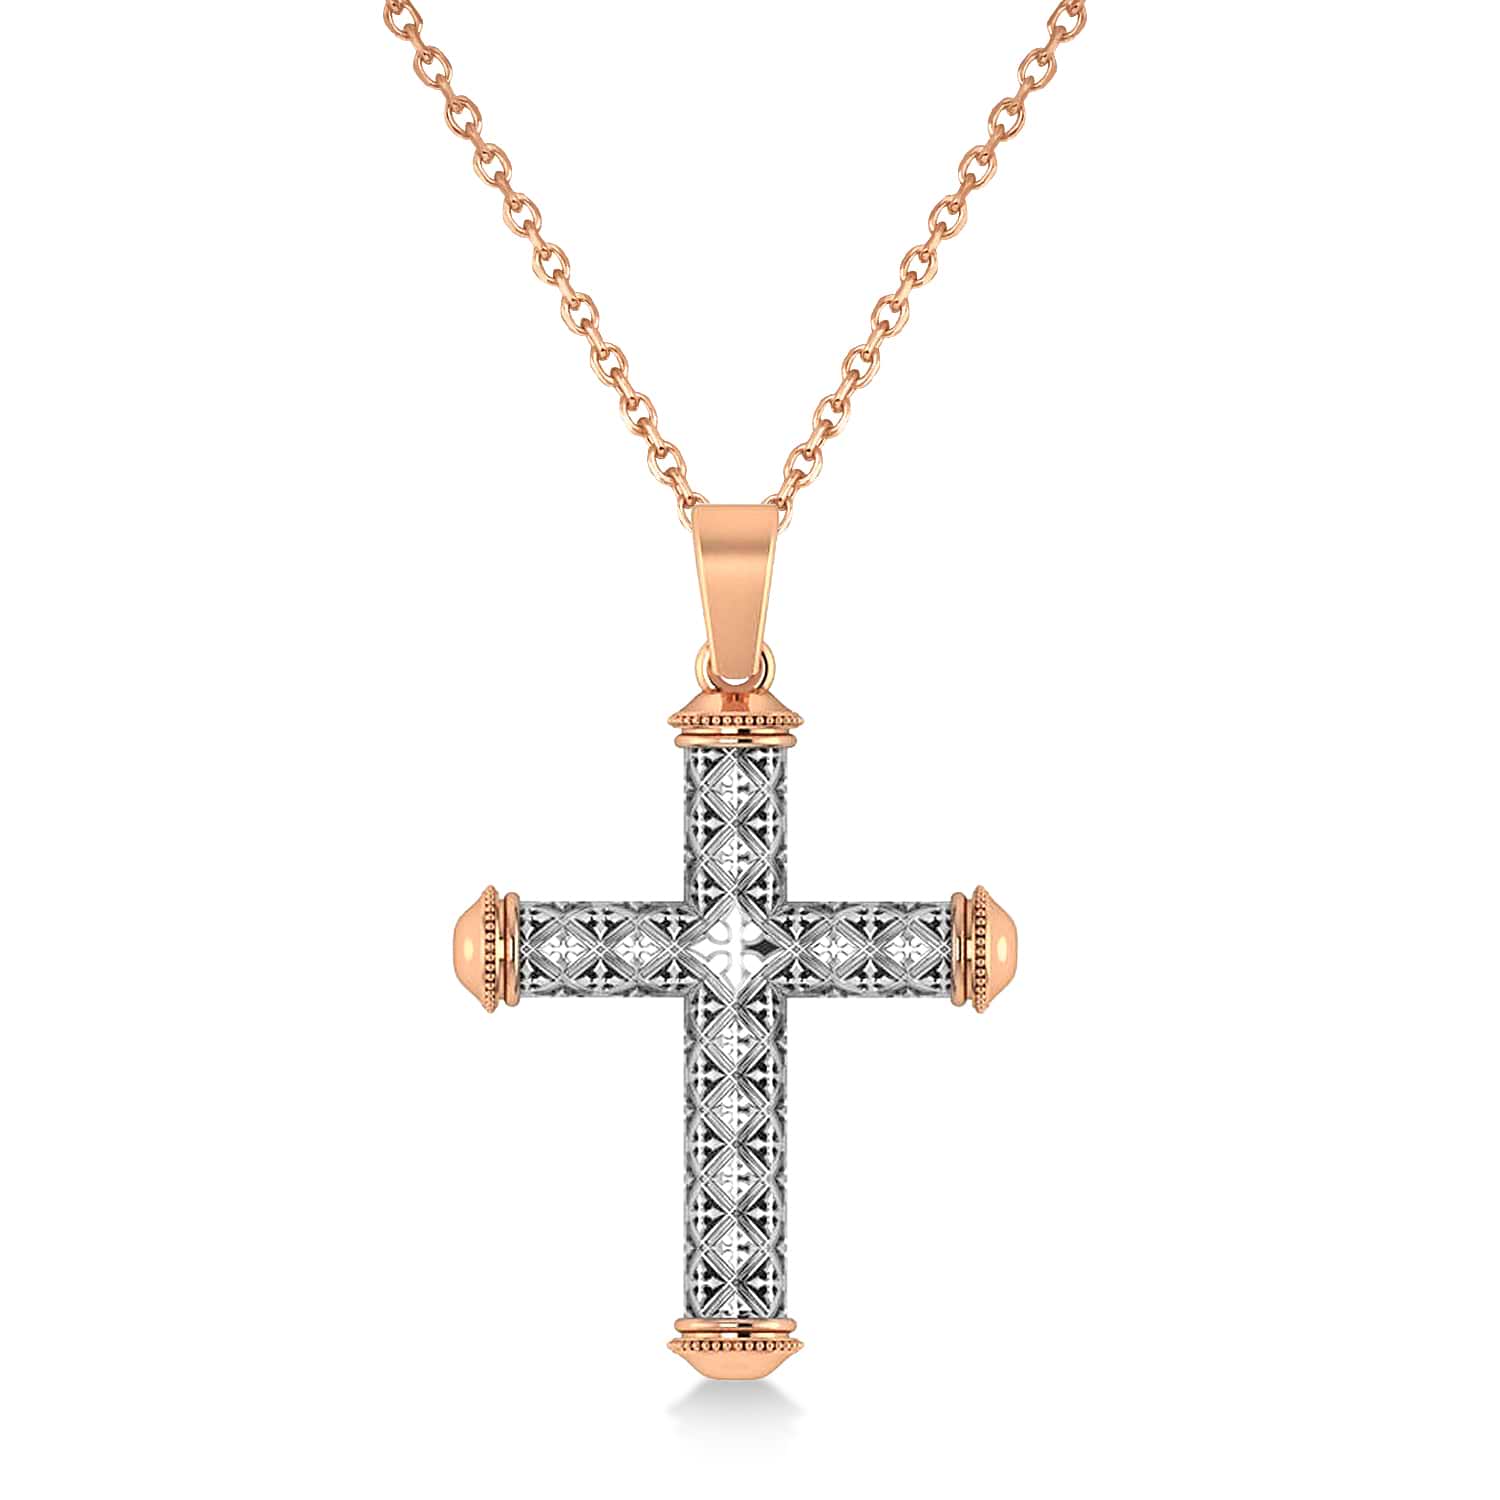 Designer Antique Cross Men's Pendant Necklace 14k Rose Gold